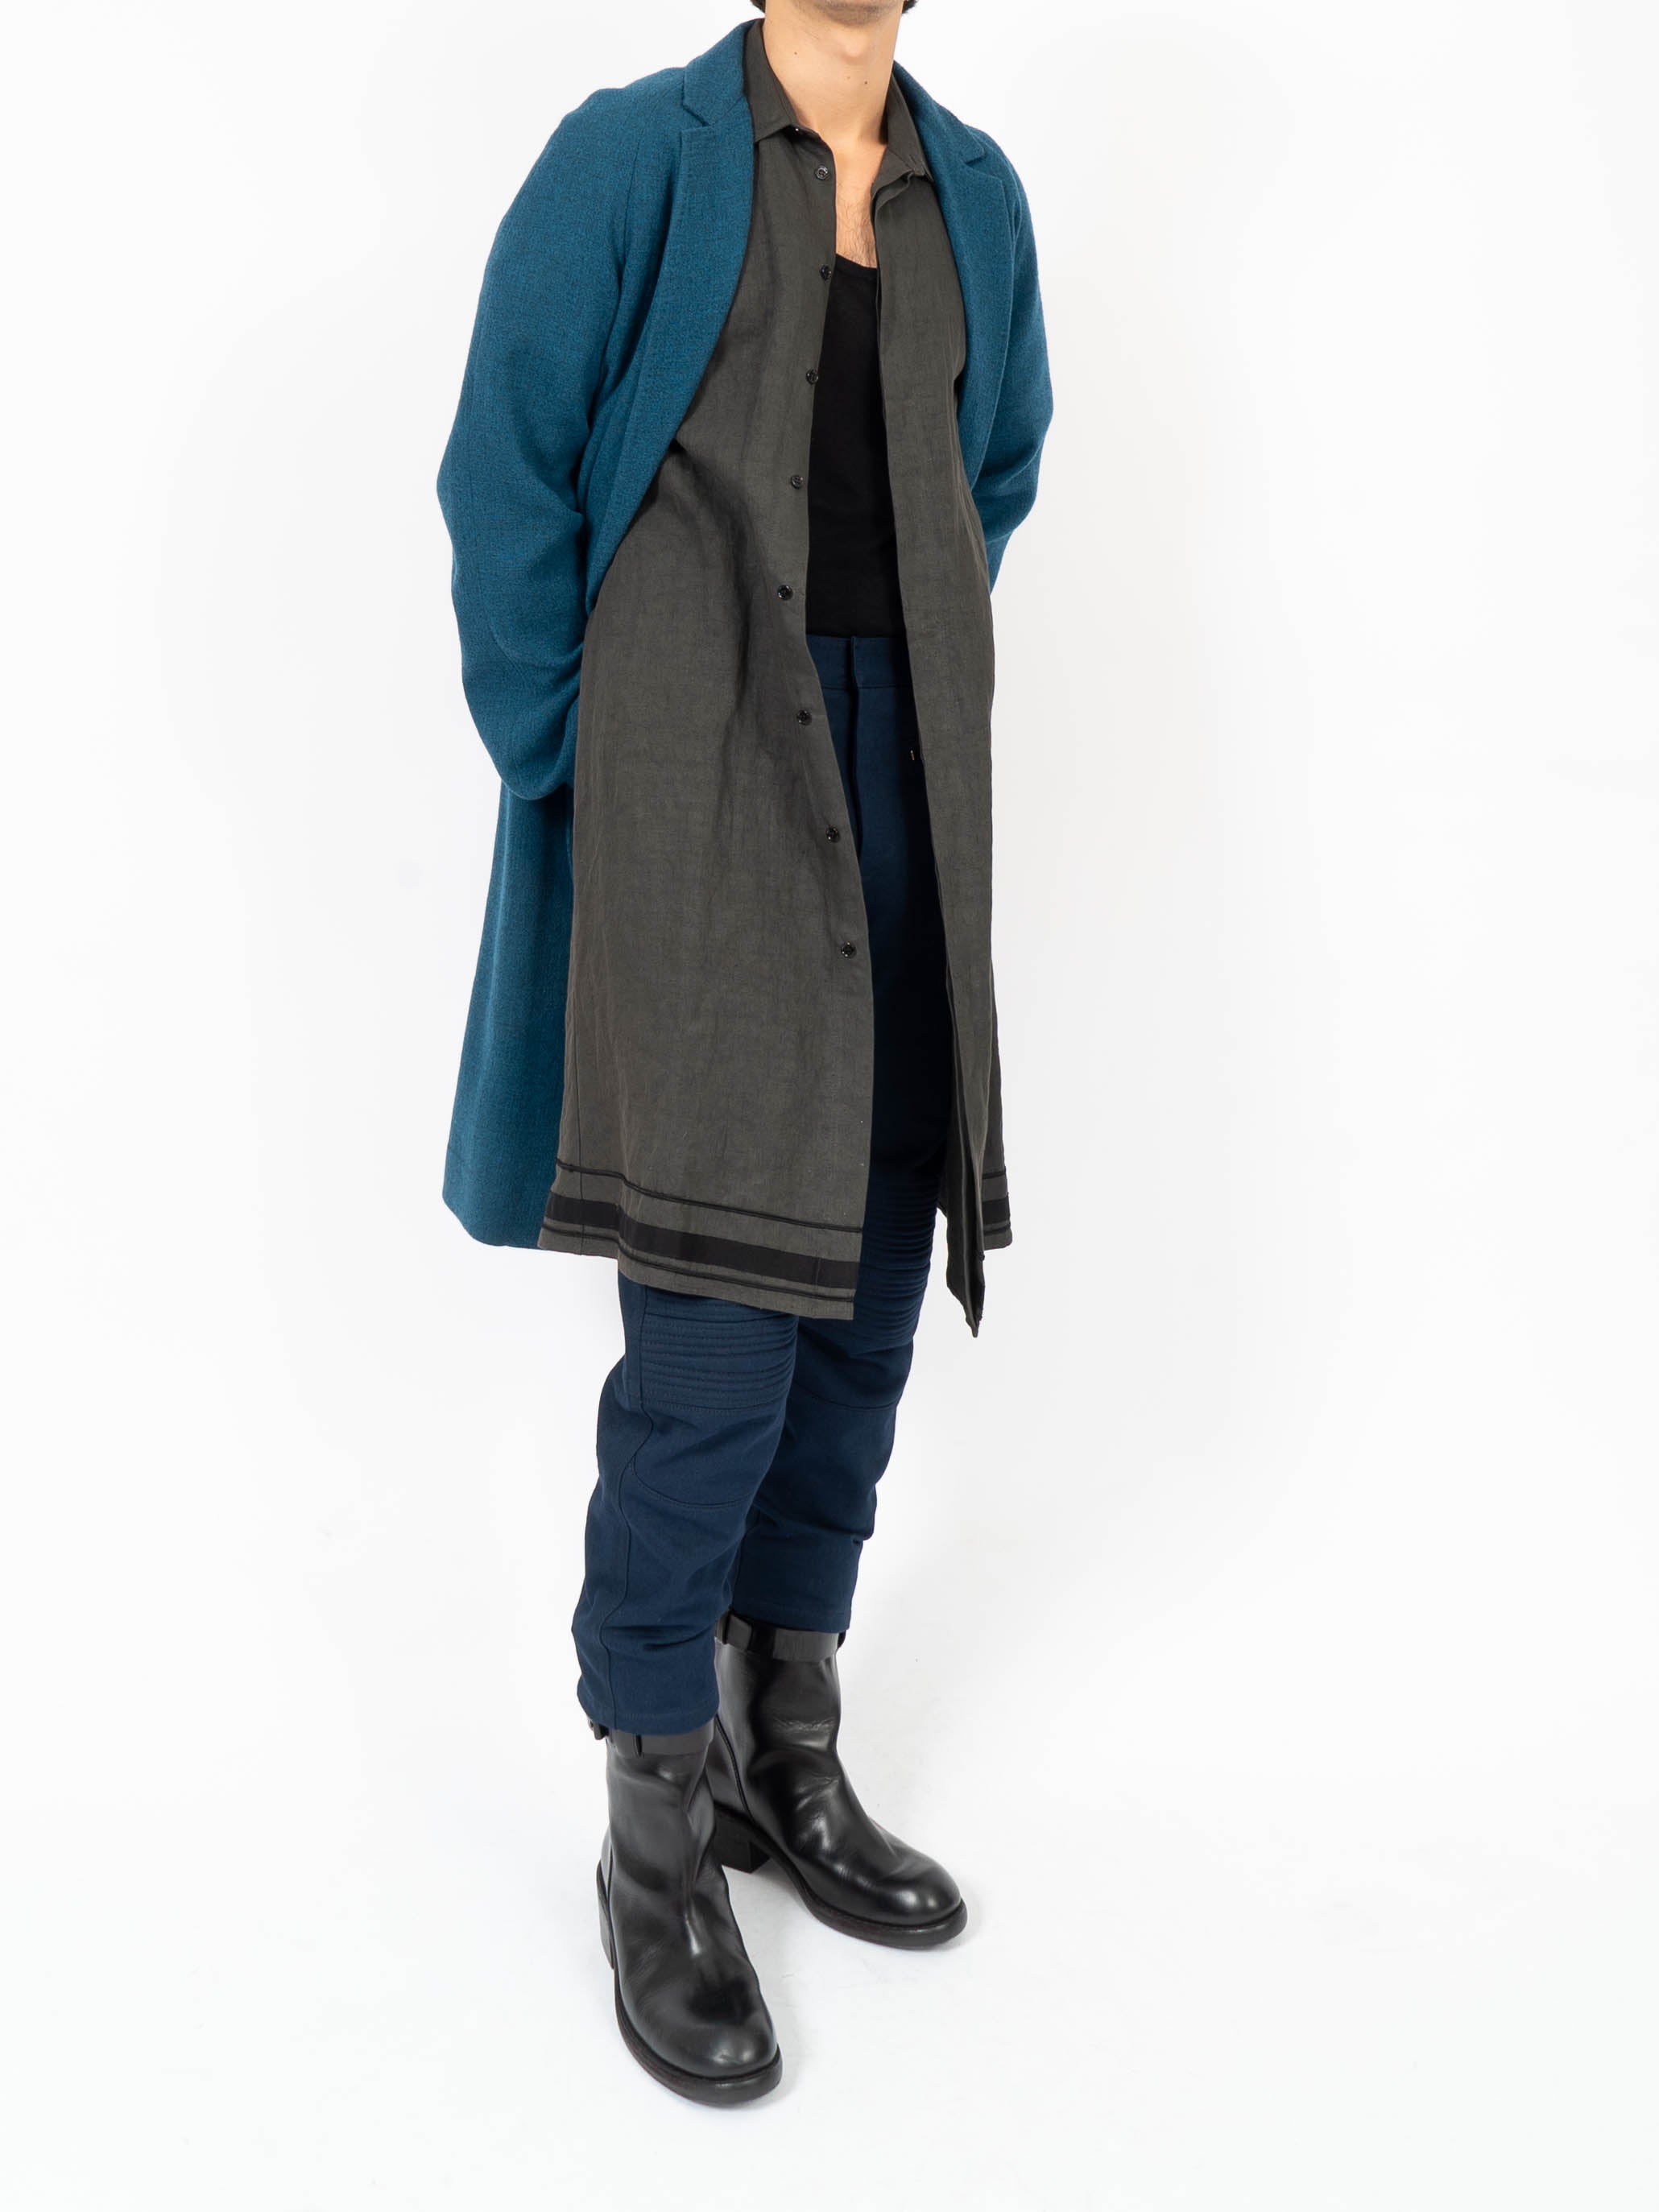 FW16 Blue raglan Wool Coat